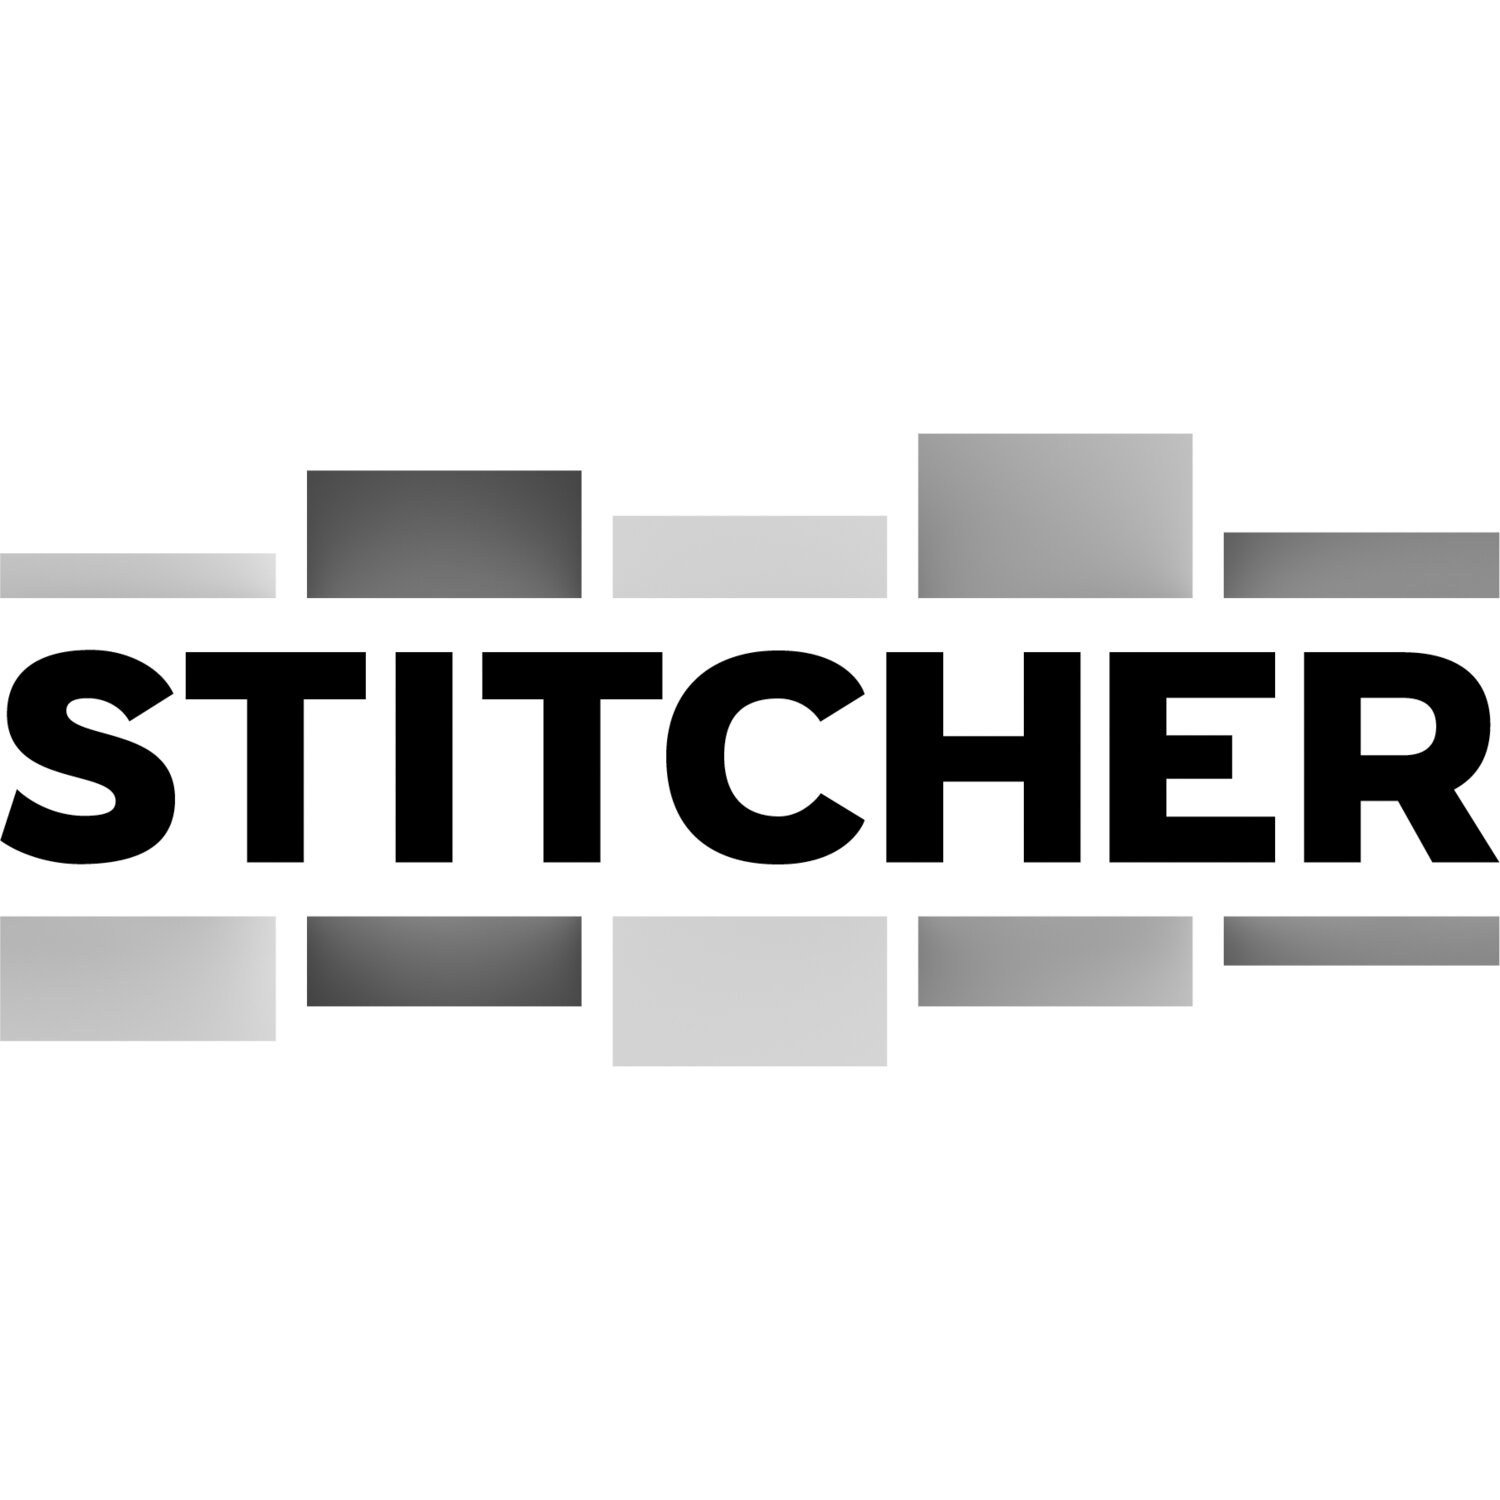 Stitcher_FullColor-Edit-2.JPG